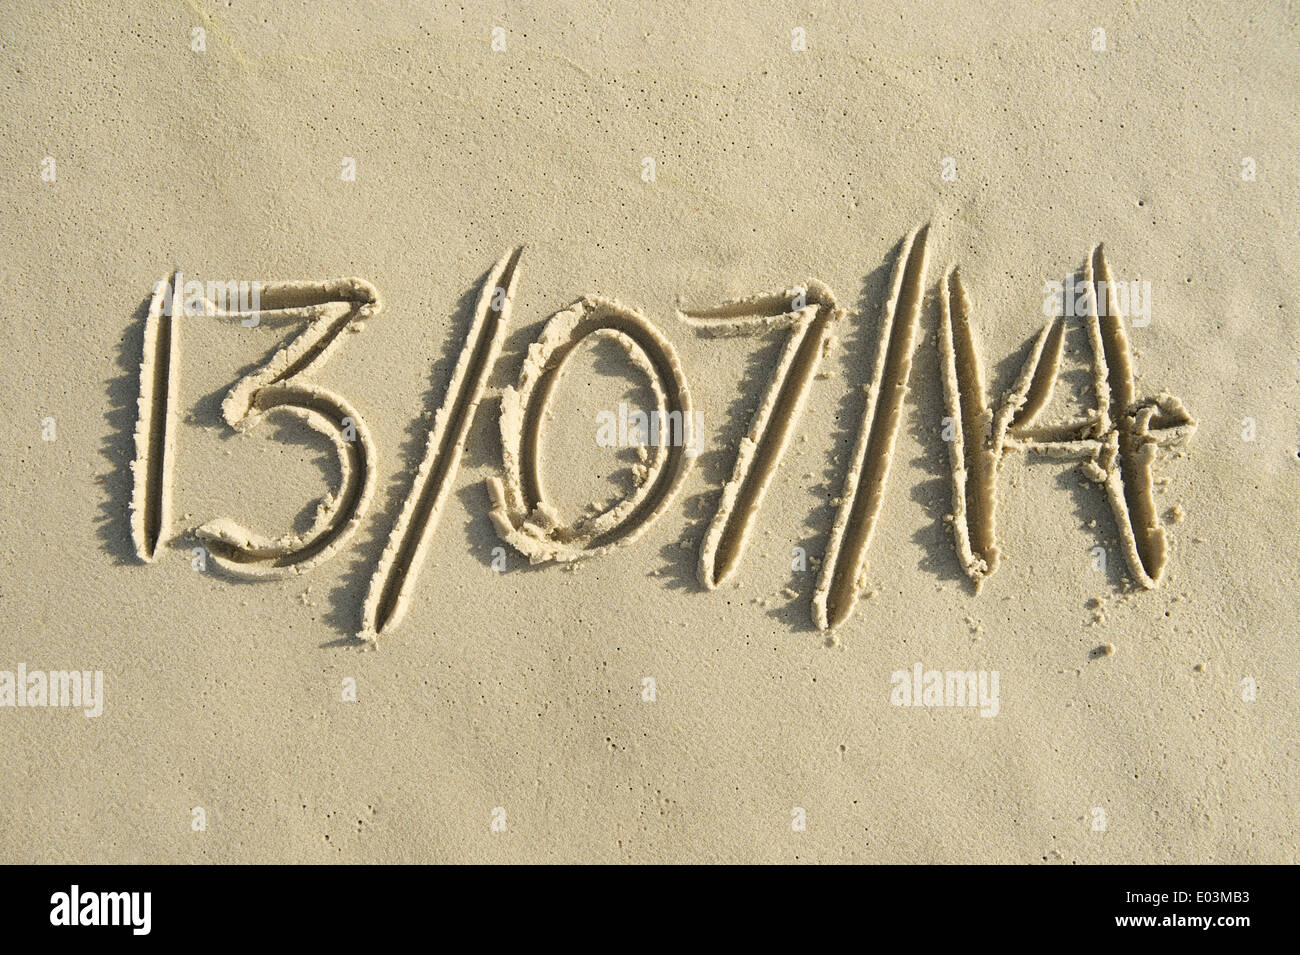 World Cup Brazil final date message handwritten in sand Stock Photo